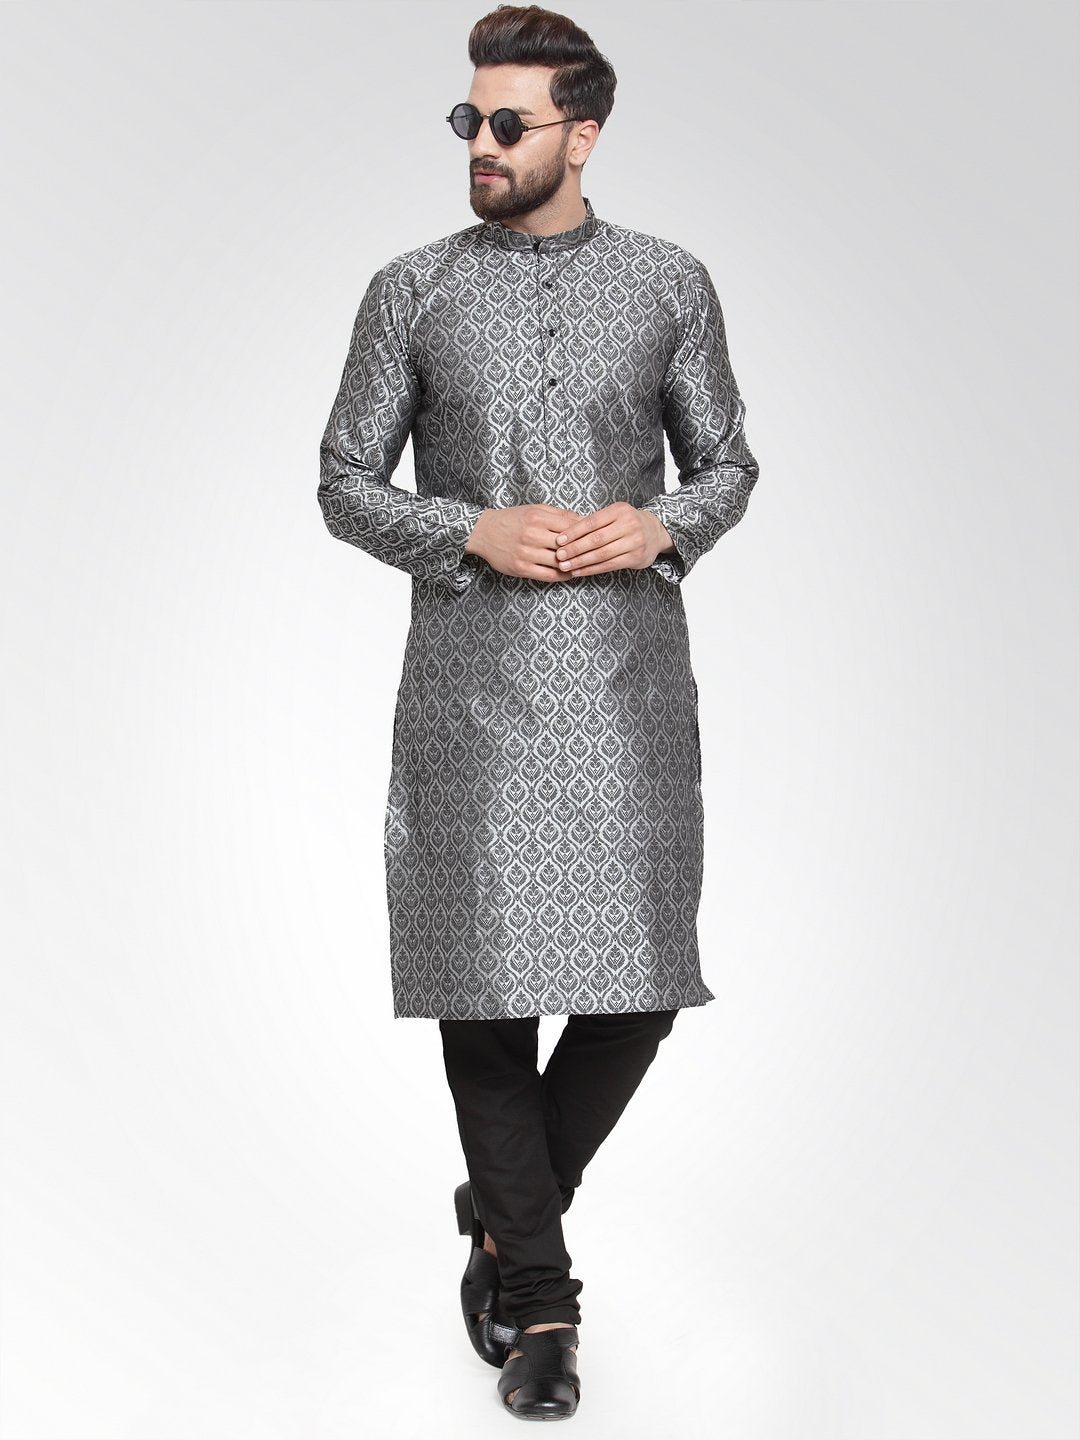 Men's Silver-Colored & Black Self Design Kurta with Churidar ( JOKP 584 Silver ) - Virat Fashions